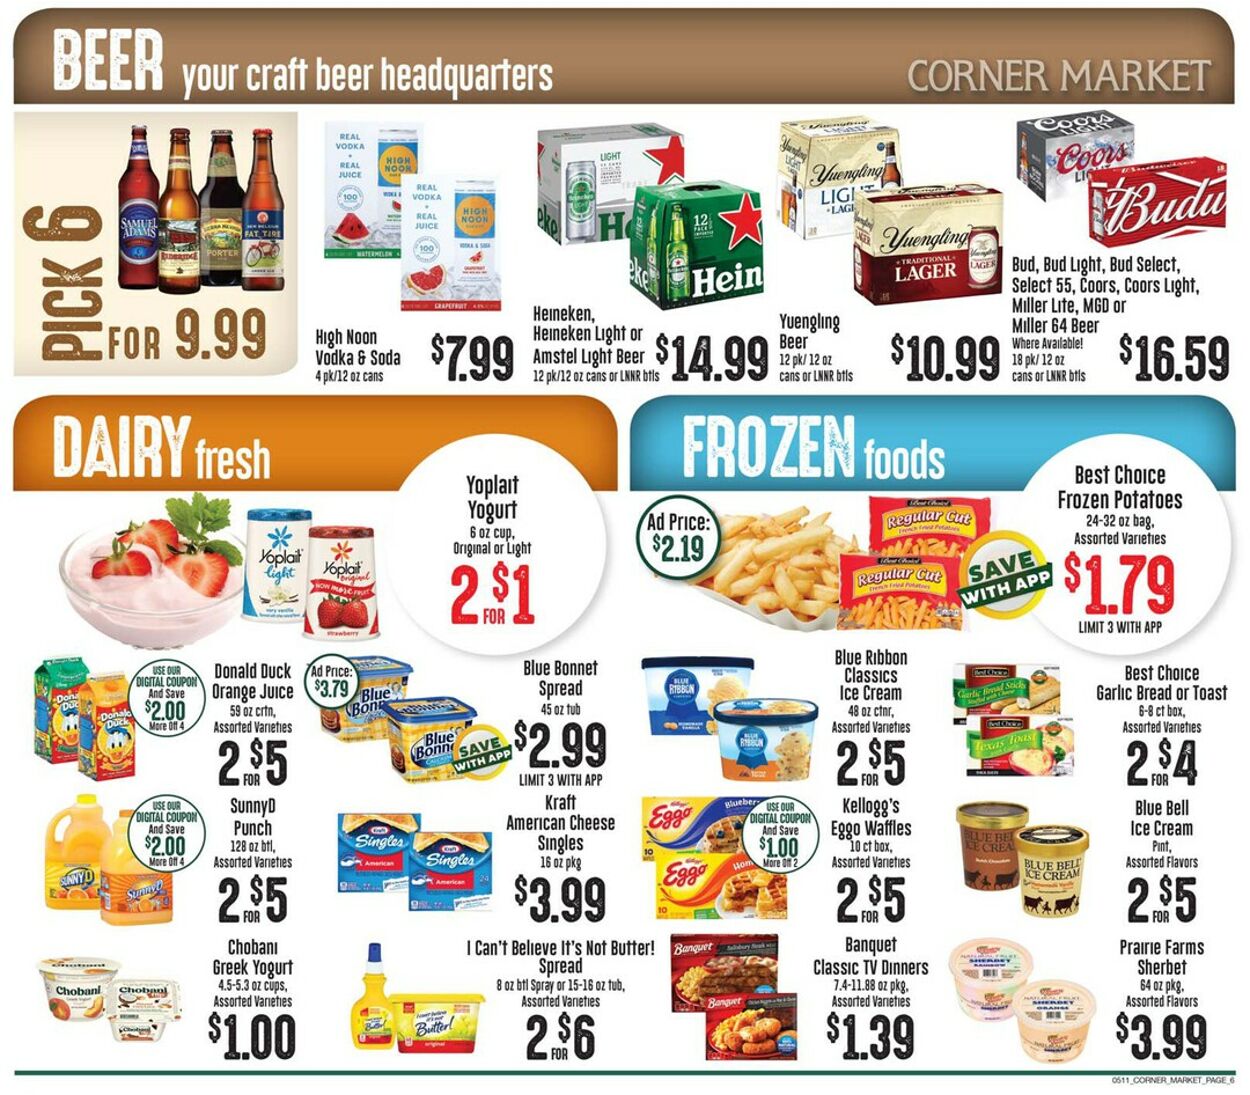 Weekly ad Corner Market 05/11/2022 - 05/17/2022